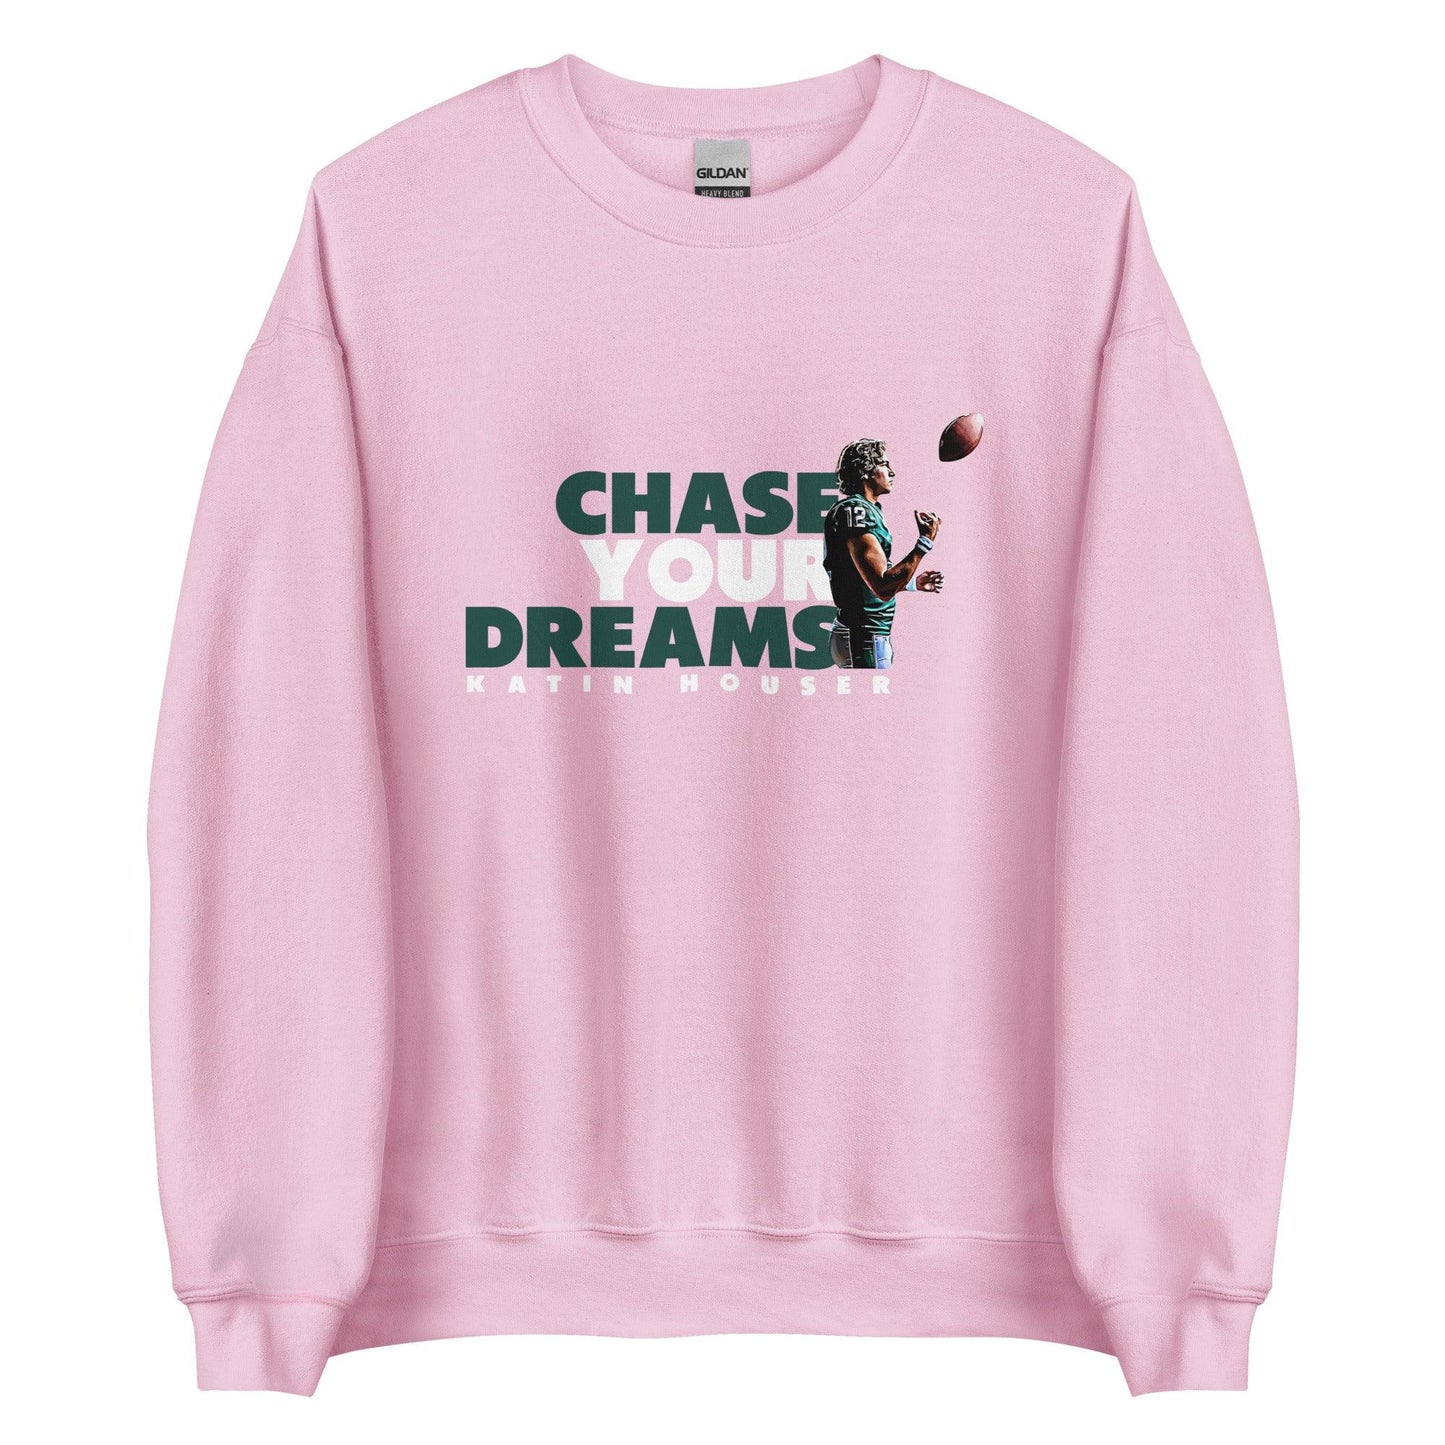 Katin Houser "Chase Your Dreams" Sweatshirt - Fan Arch